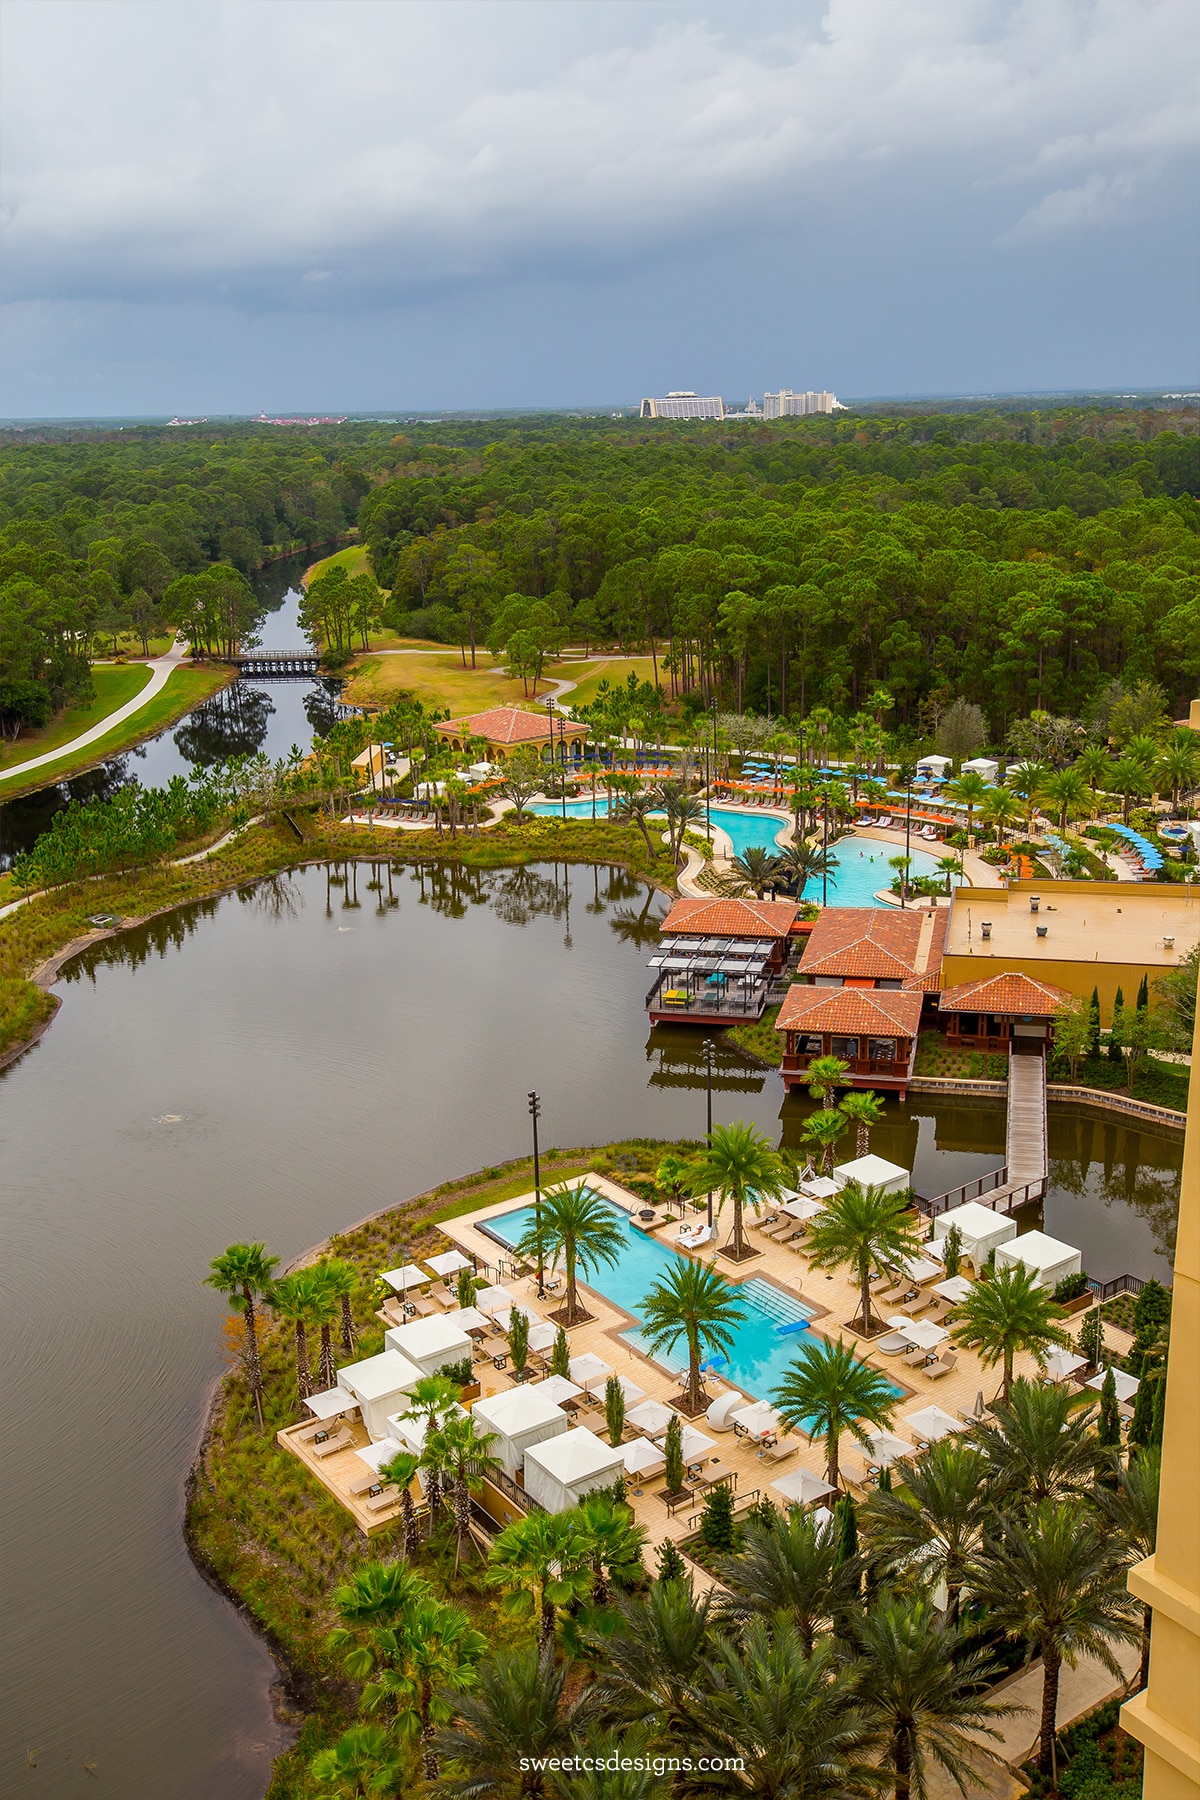 Pool areas at the four seasons resort, Orlando